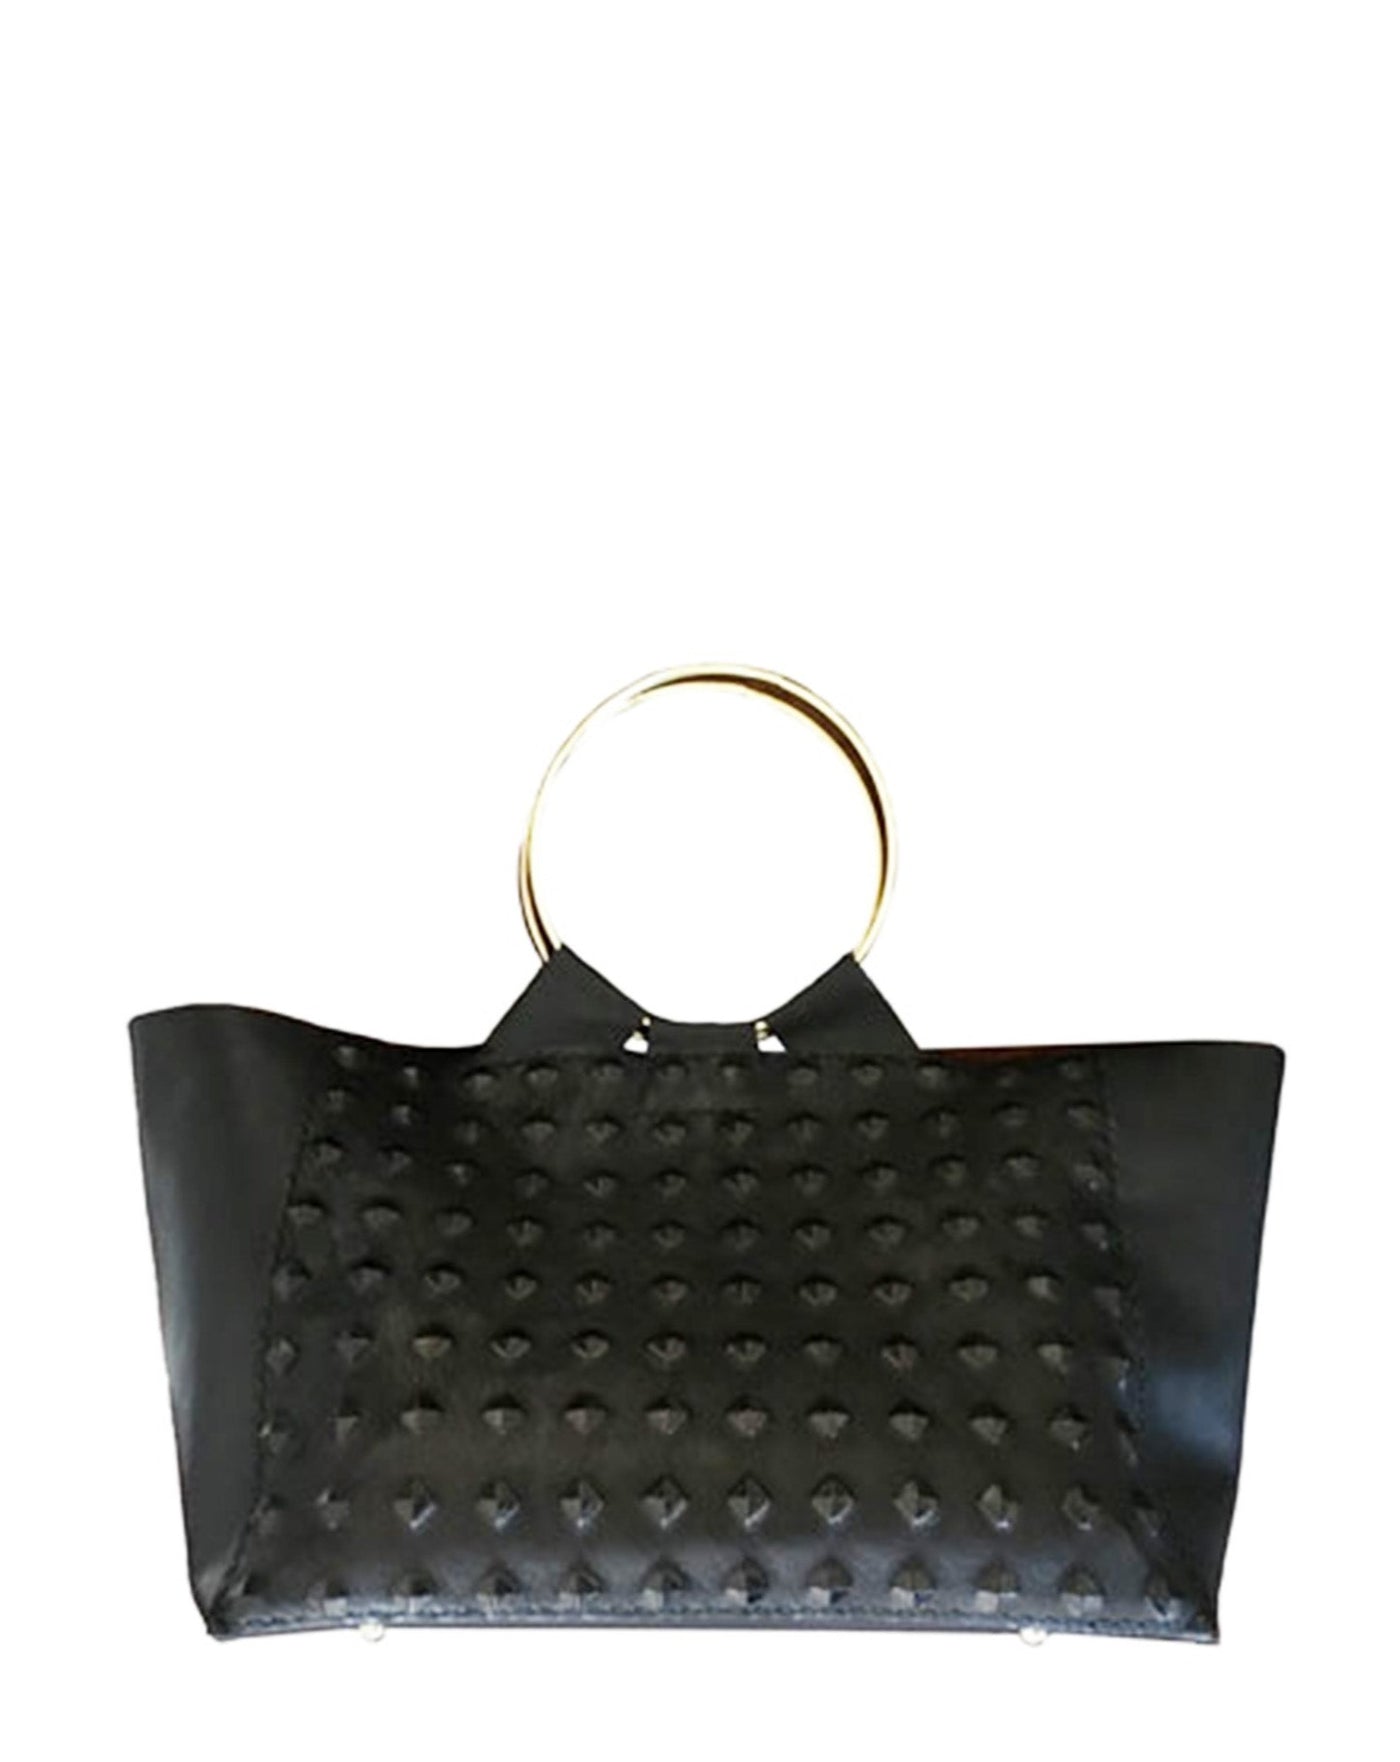 Black Madonna Handbag